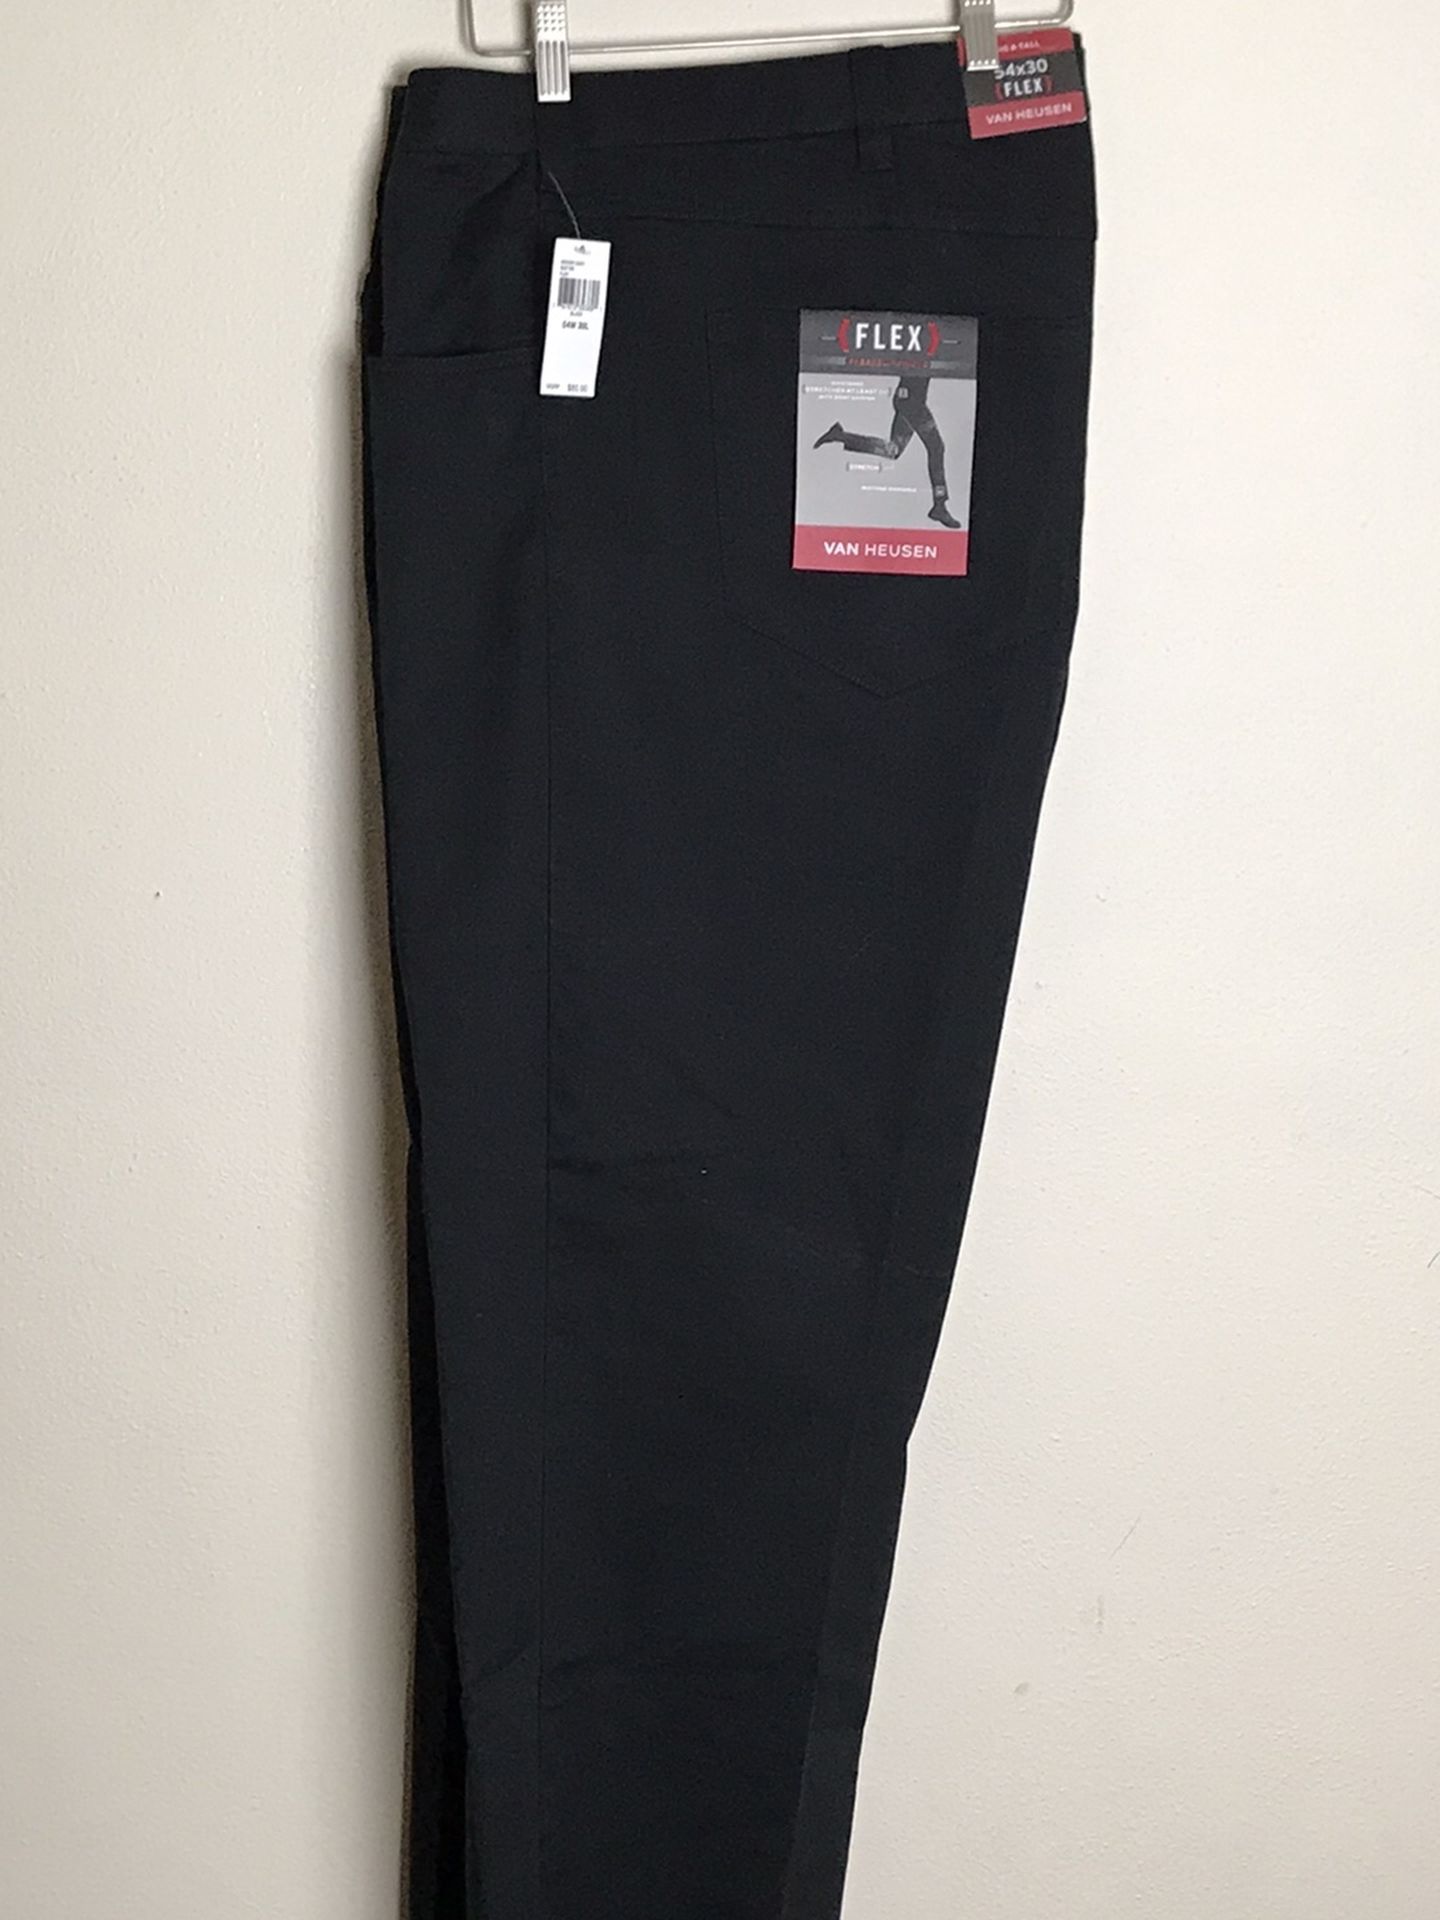 Men's Dress Black Pants by Van Heusen Flex3 Comfort Size 54 X 30MSRP $80 New with tags